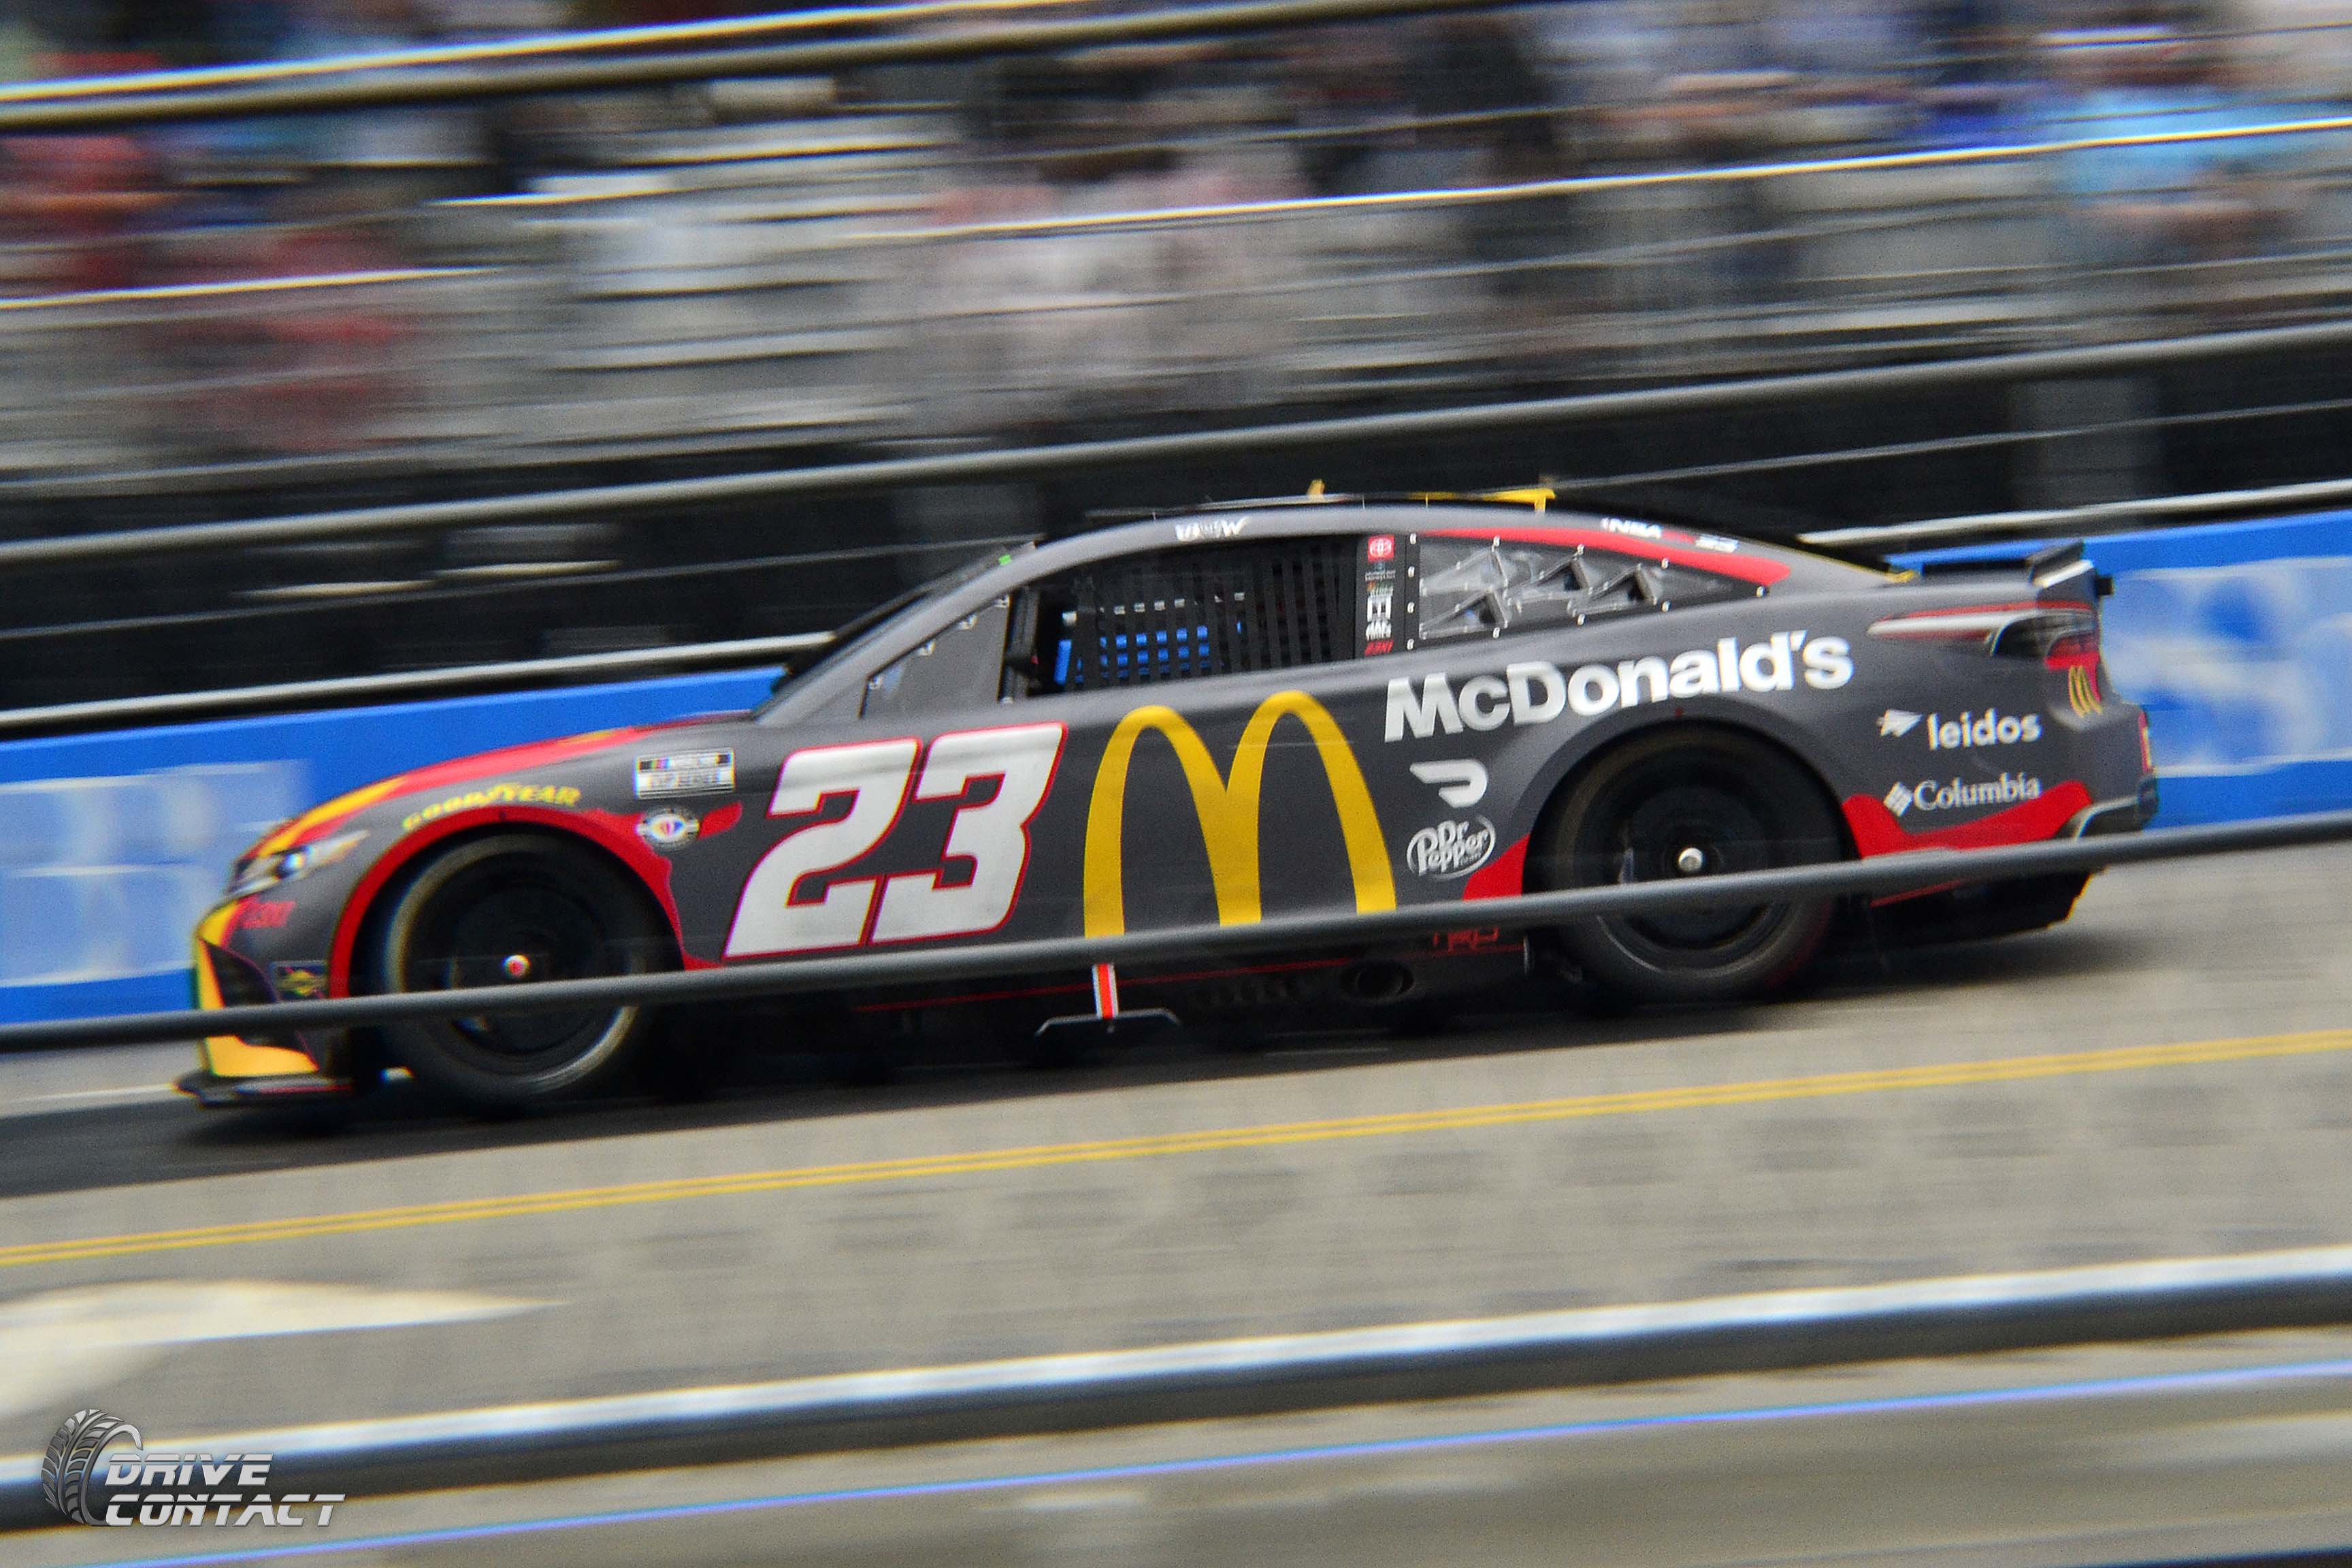 Bubba Wallace will drive the No. 23 McDonald's Toyota